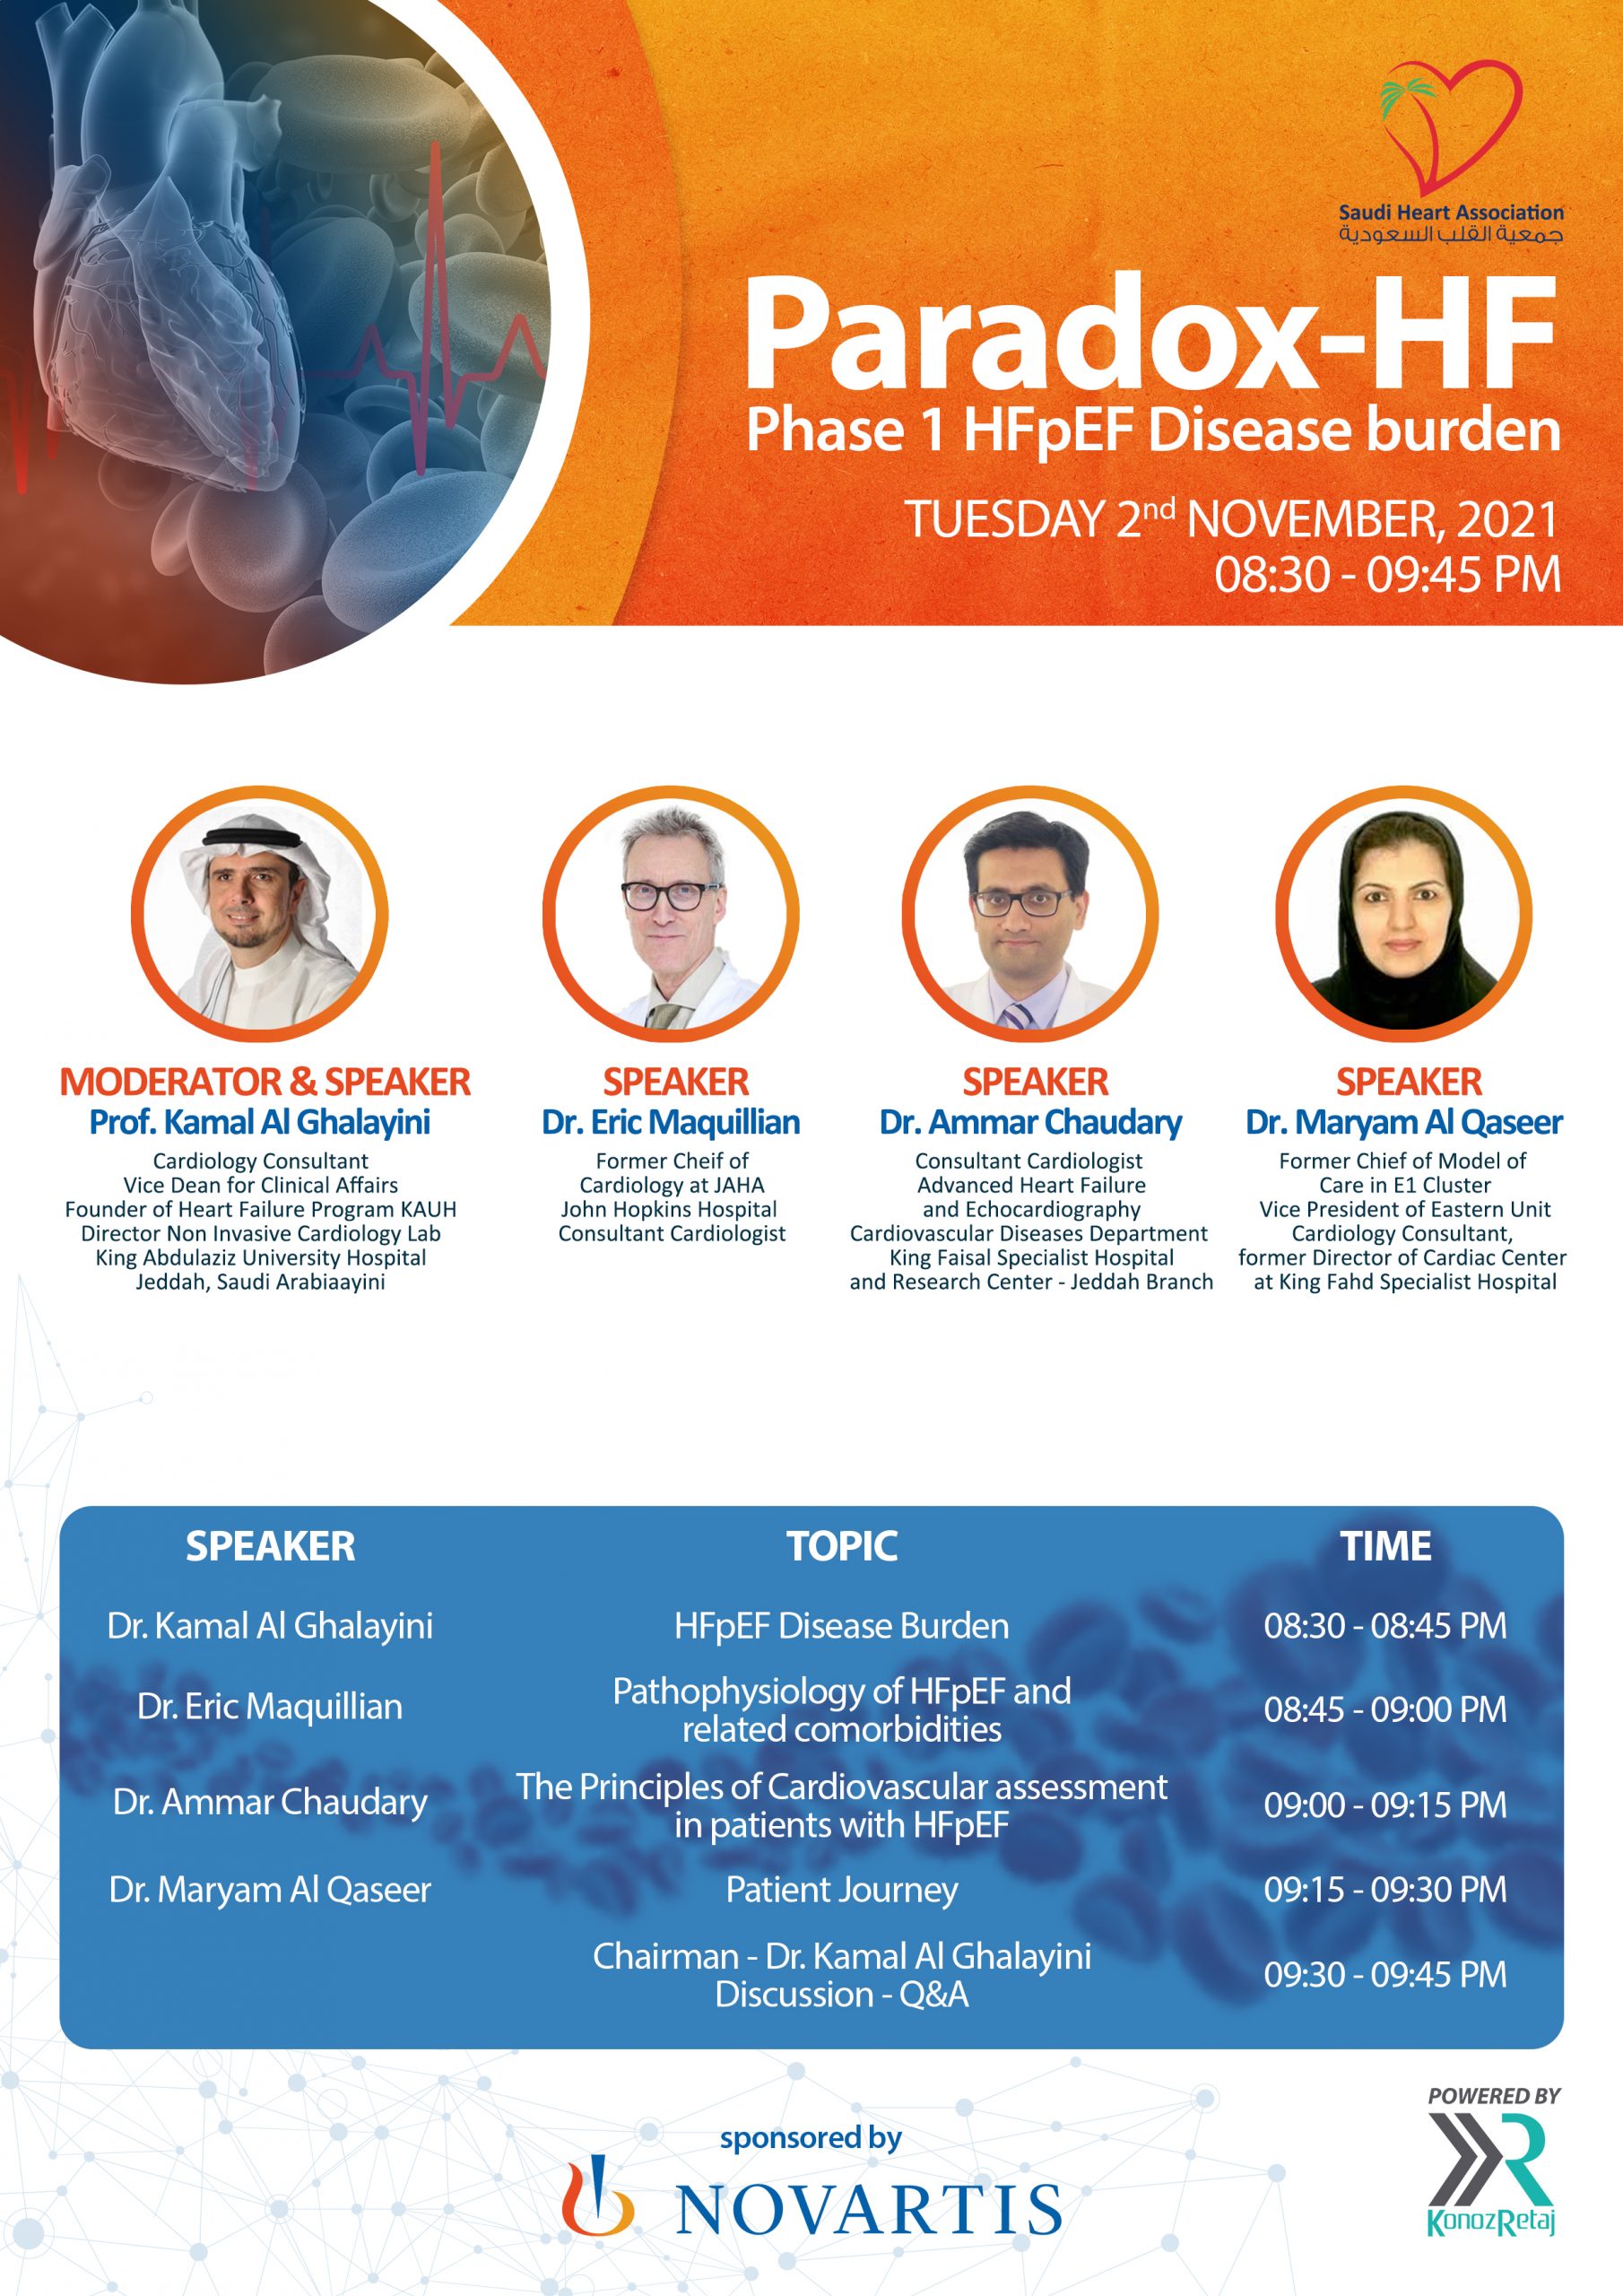 Paradox-HF Phase 1 HFpEF Disease burden